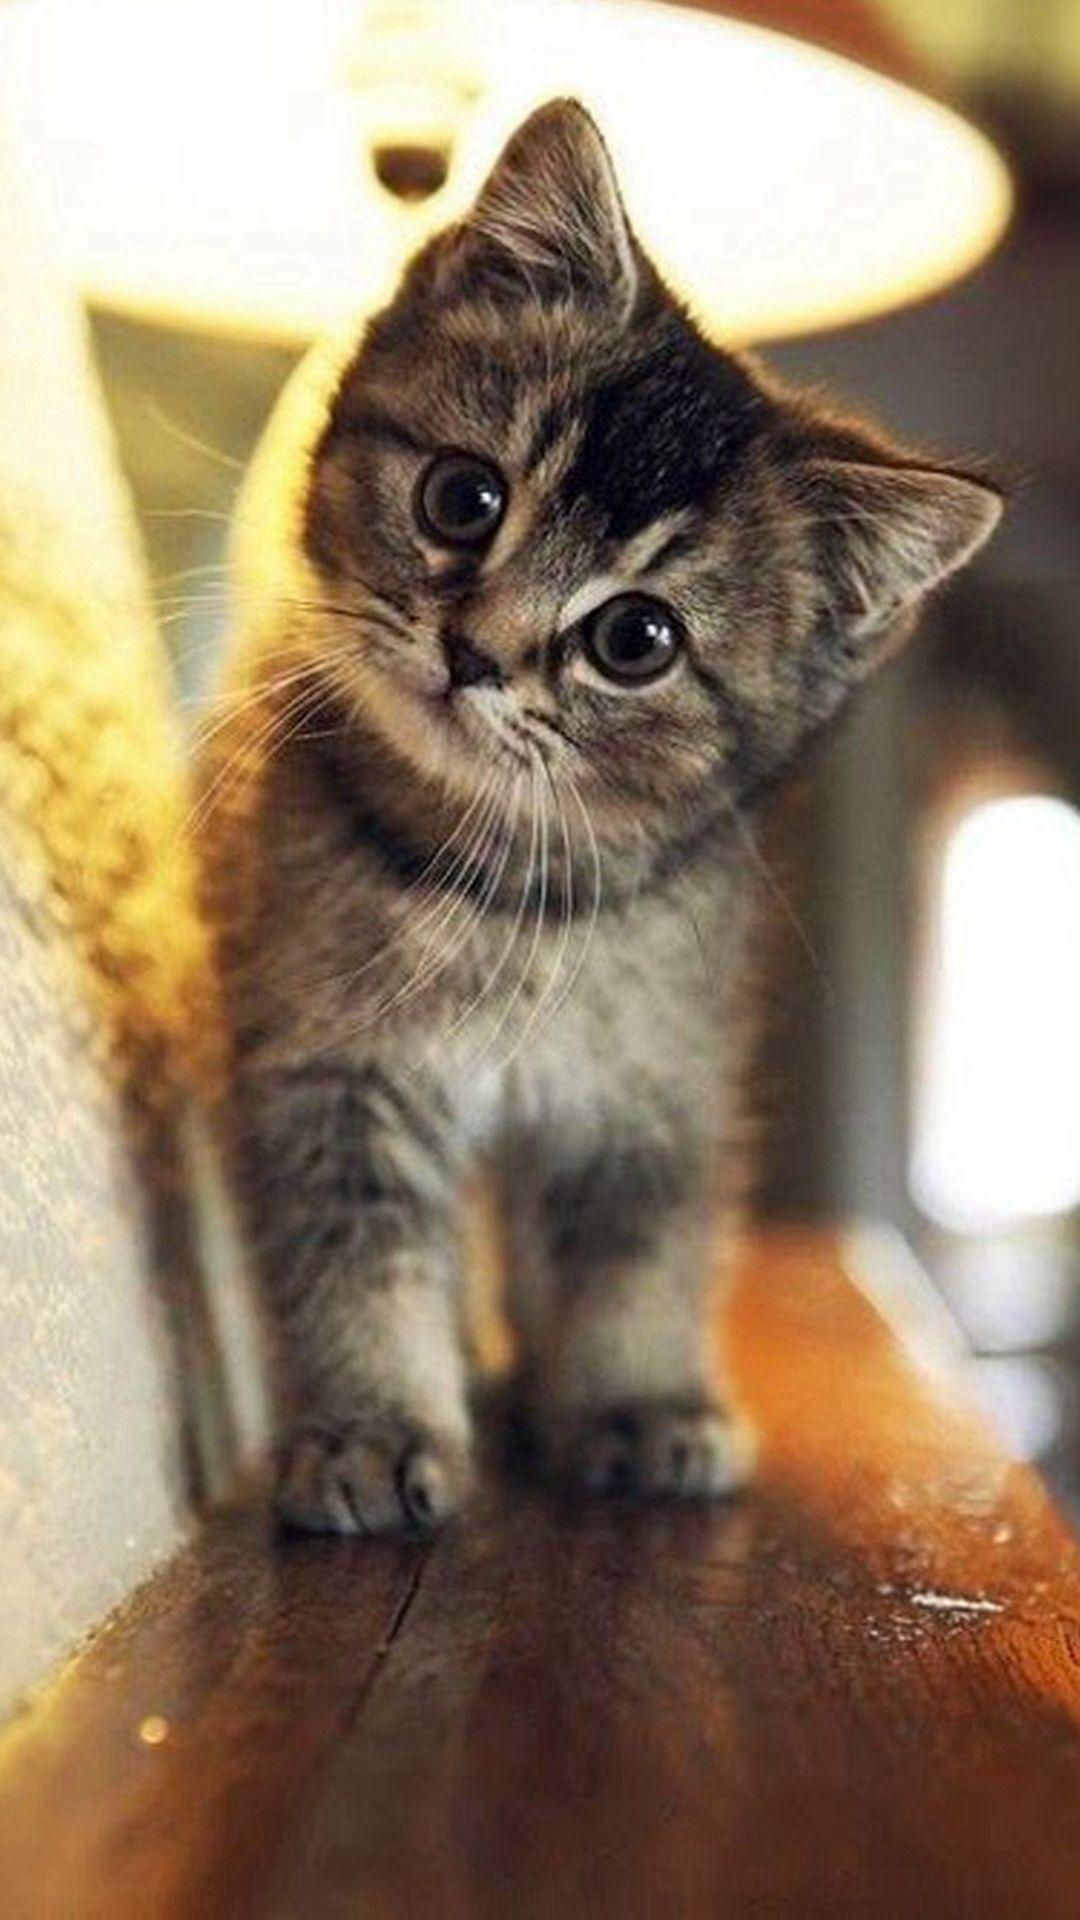 Cute Stare At Cat Animal iPhone 8 Wallpaper. Cute cat wallpaper